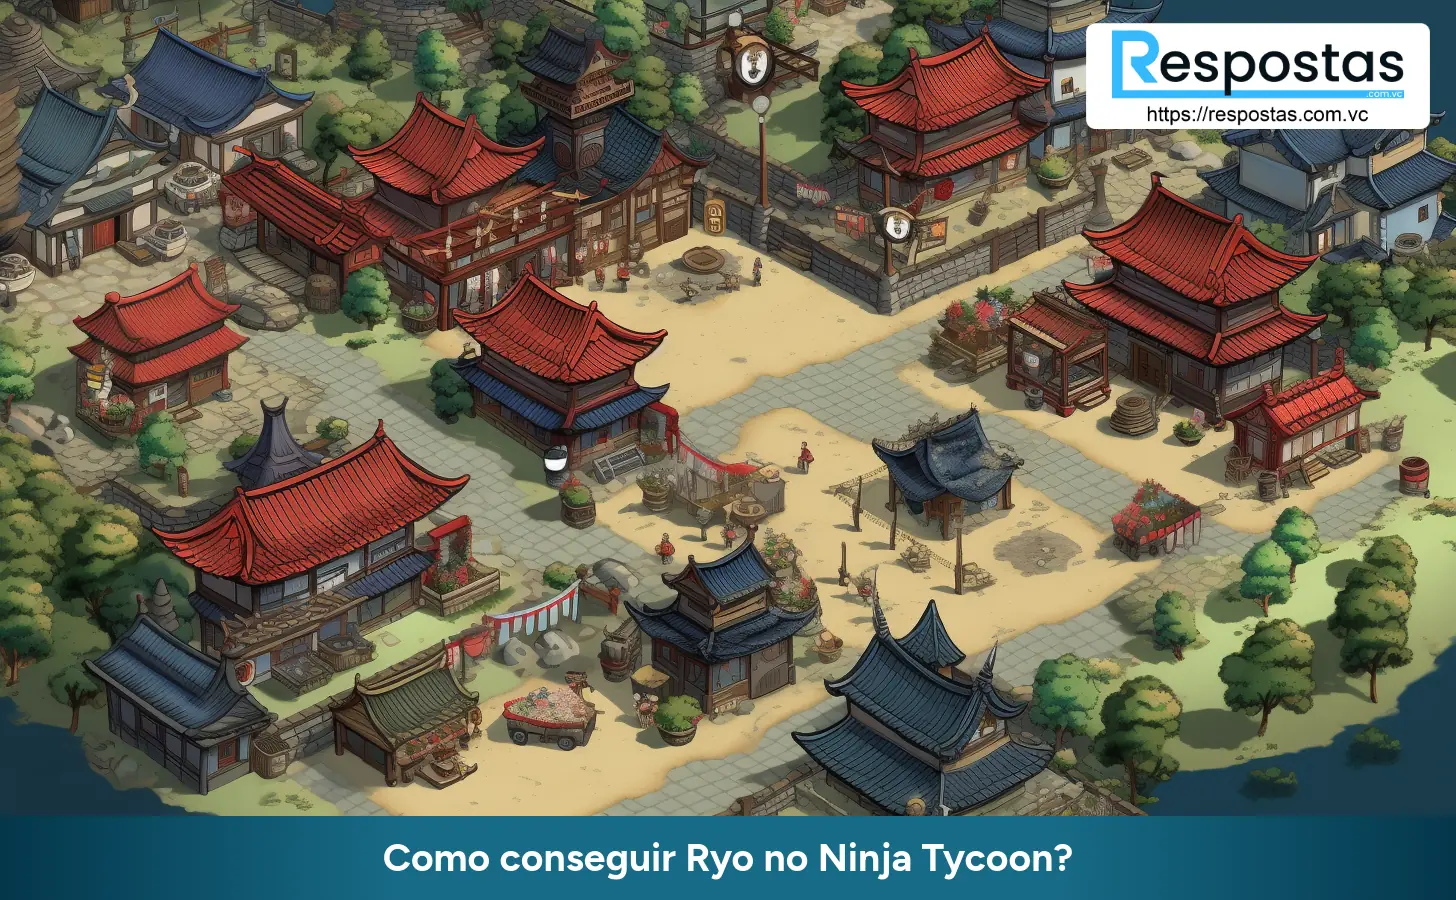 Como conseguir Ryo no Ninja Tycoon?